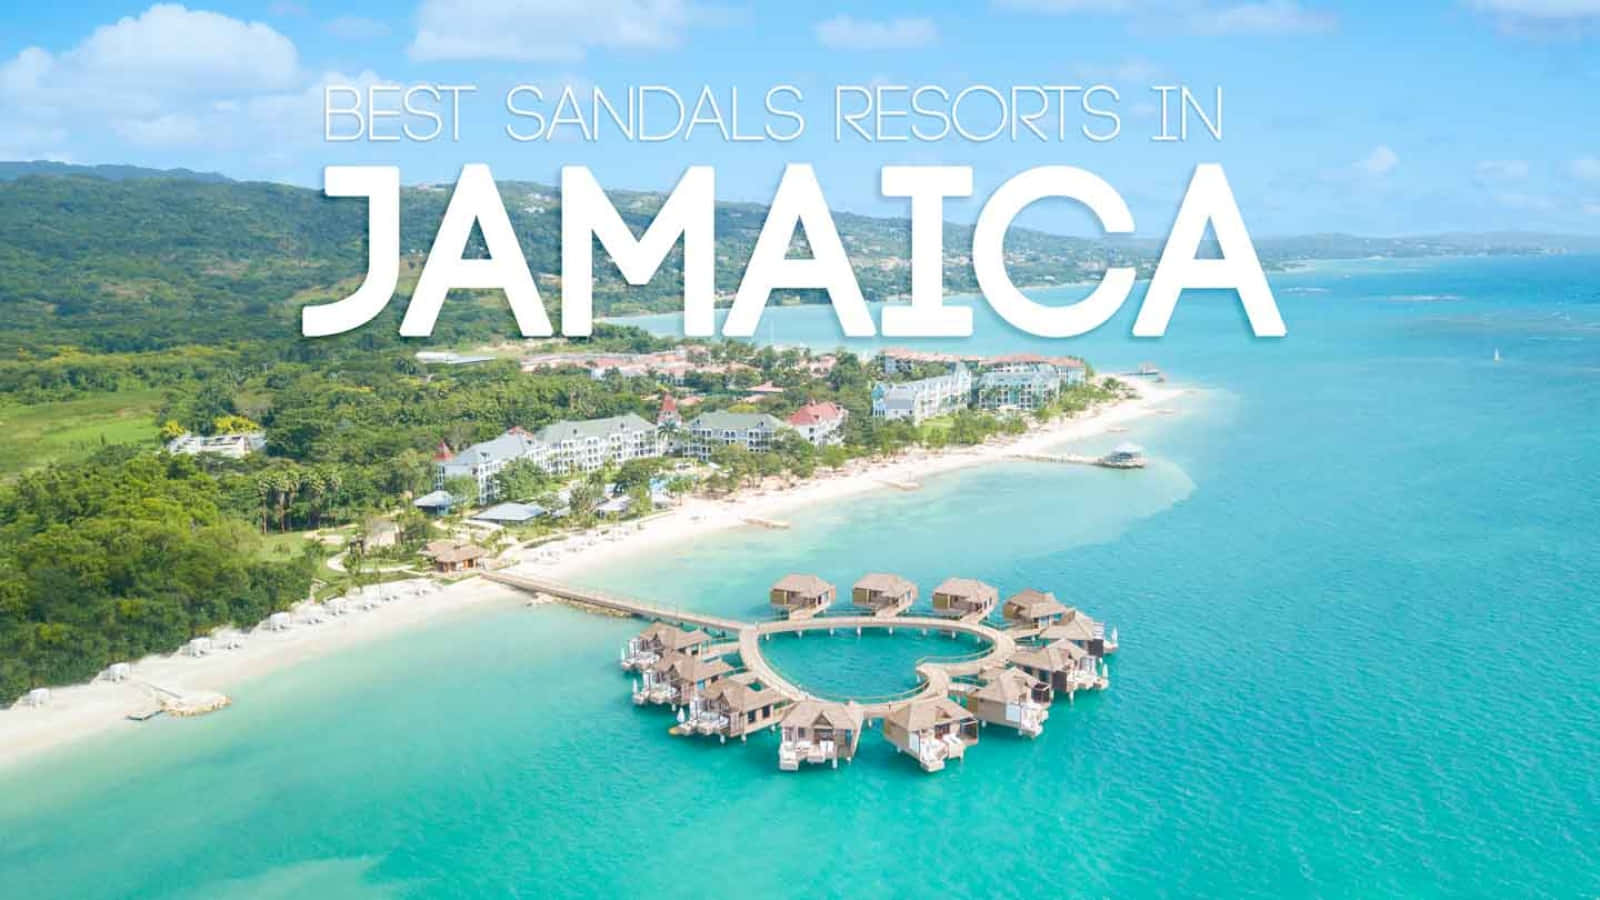 "Rejuvenate yourself in the beautiful island of Jamaica"